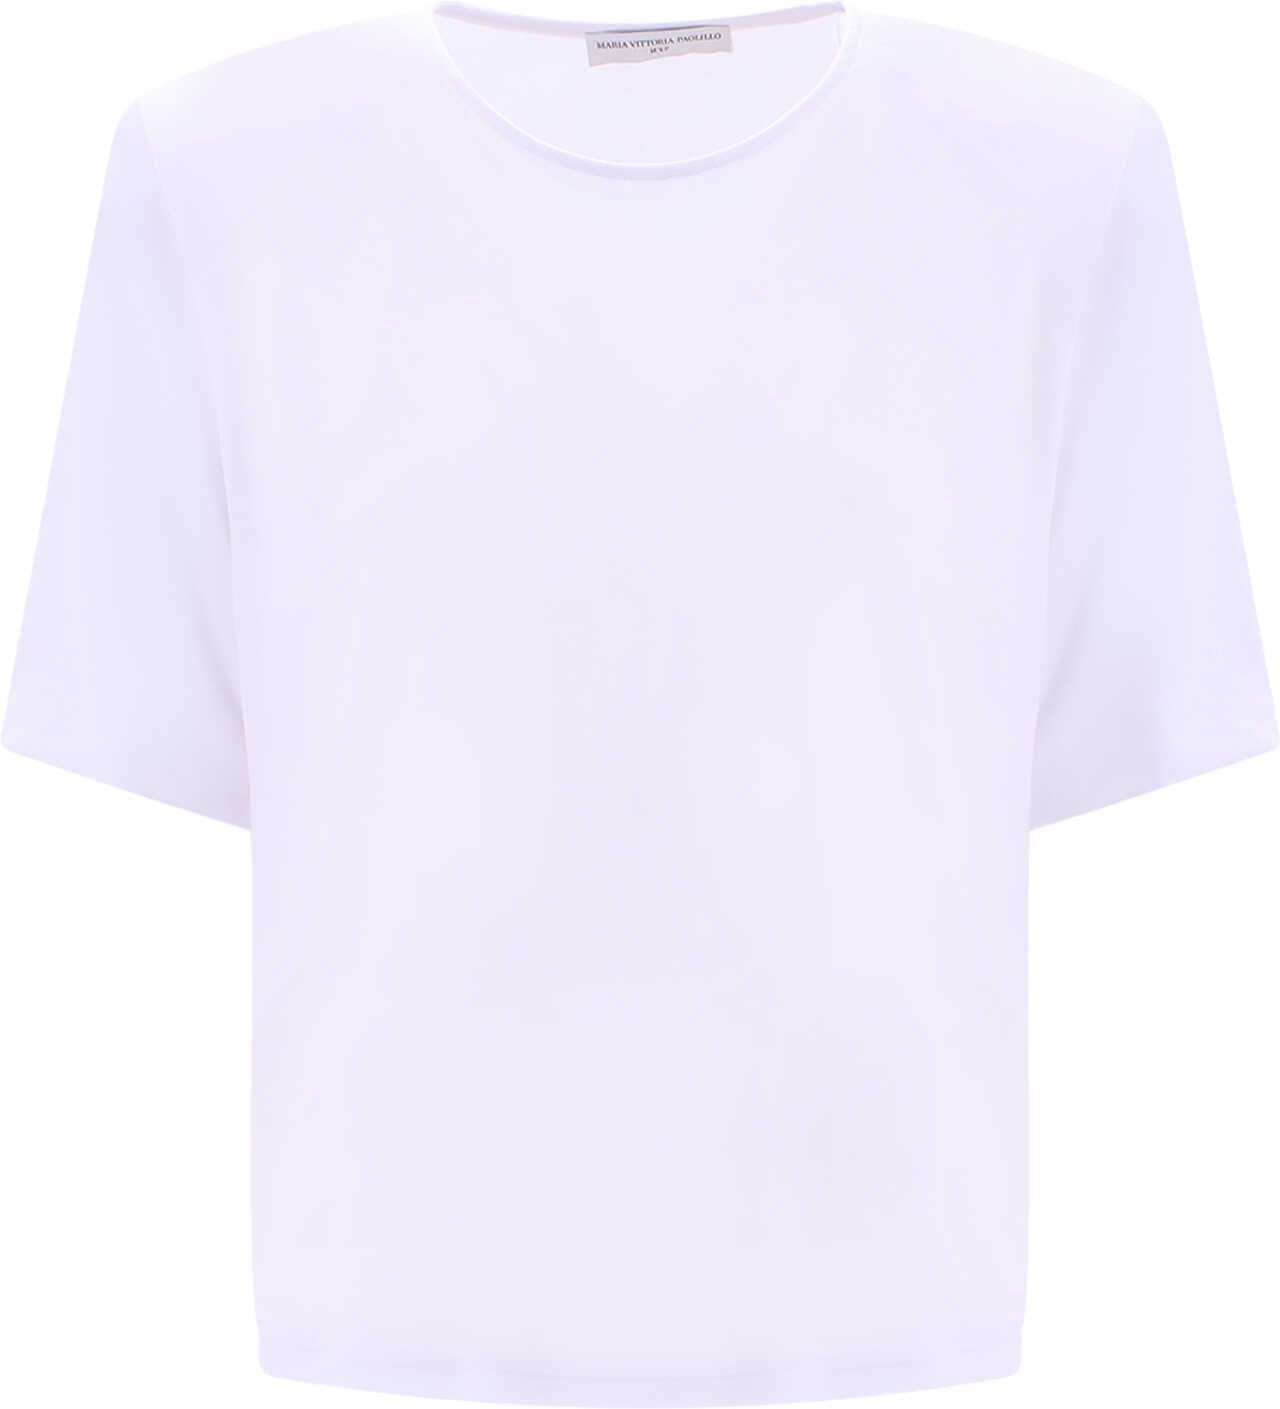 MVP WARDROBE T-Shirt White